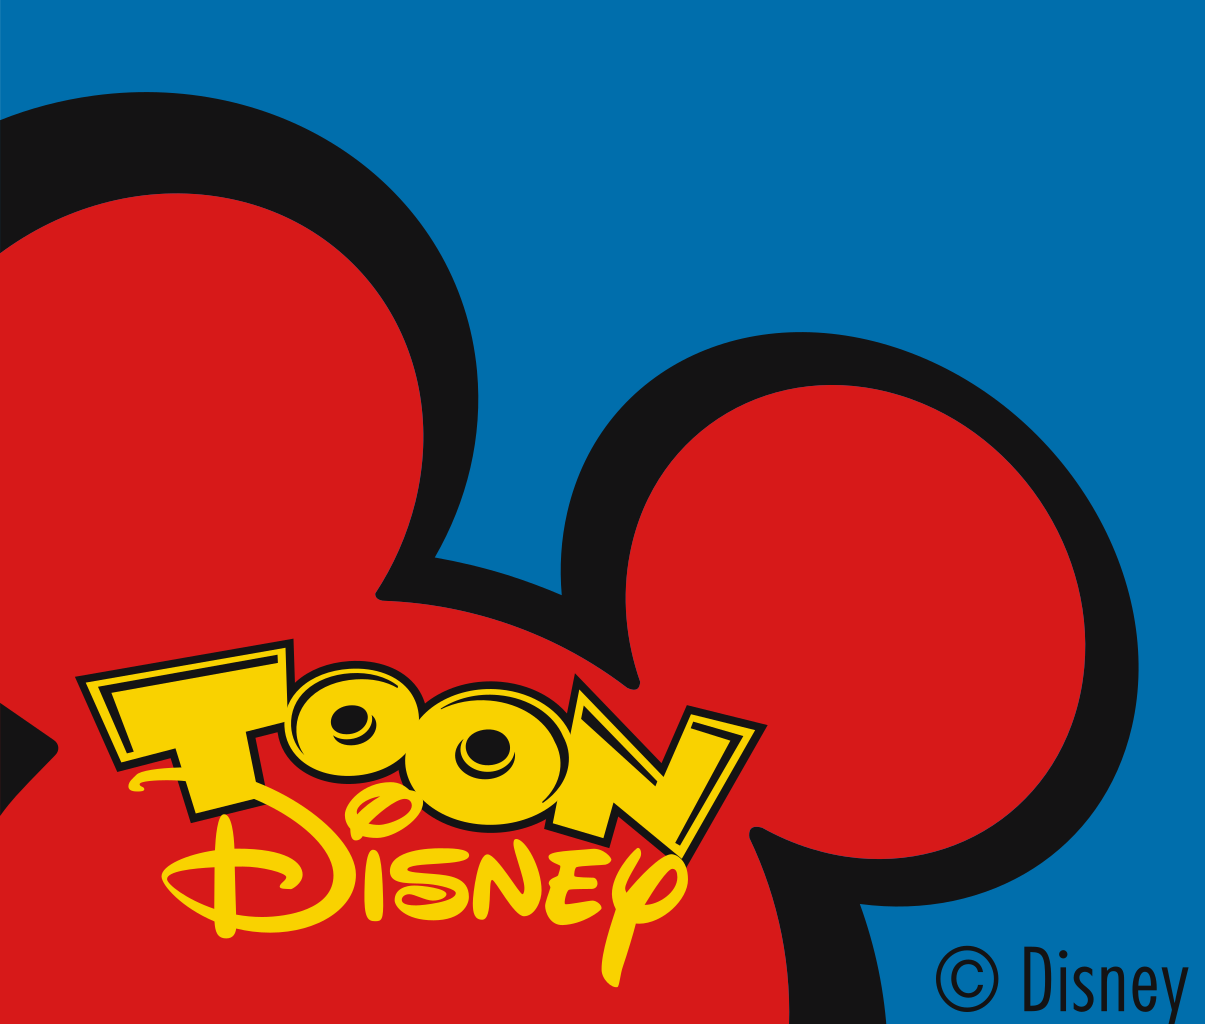 Playhouse Disney Logos